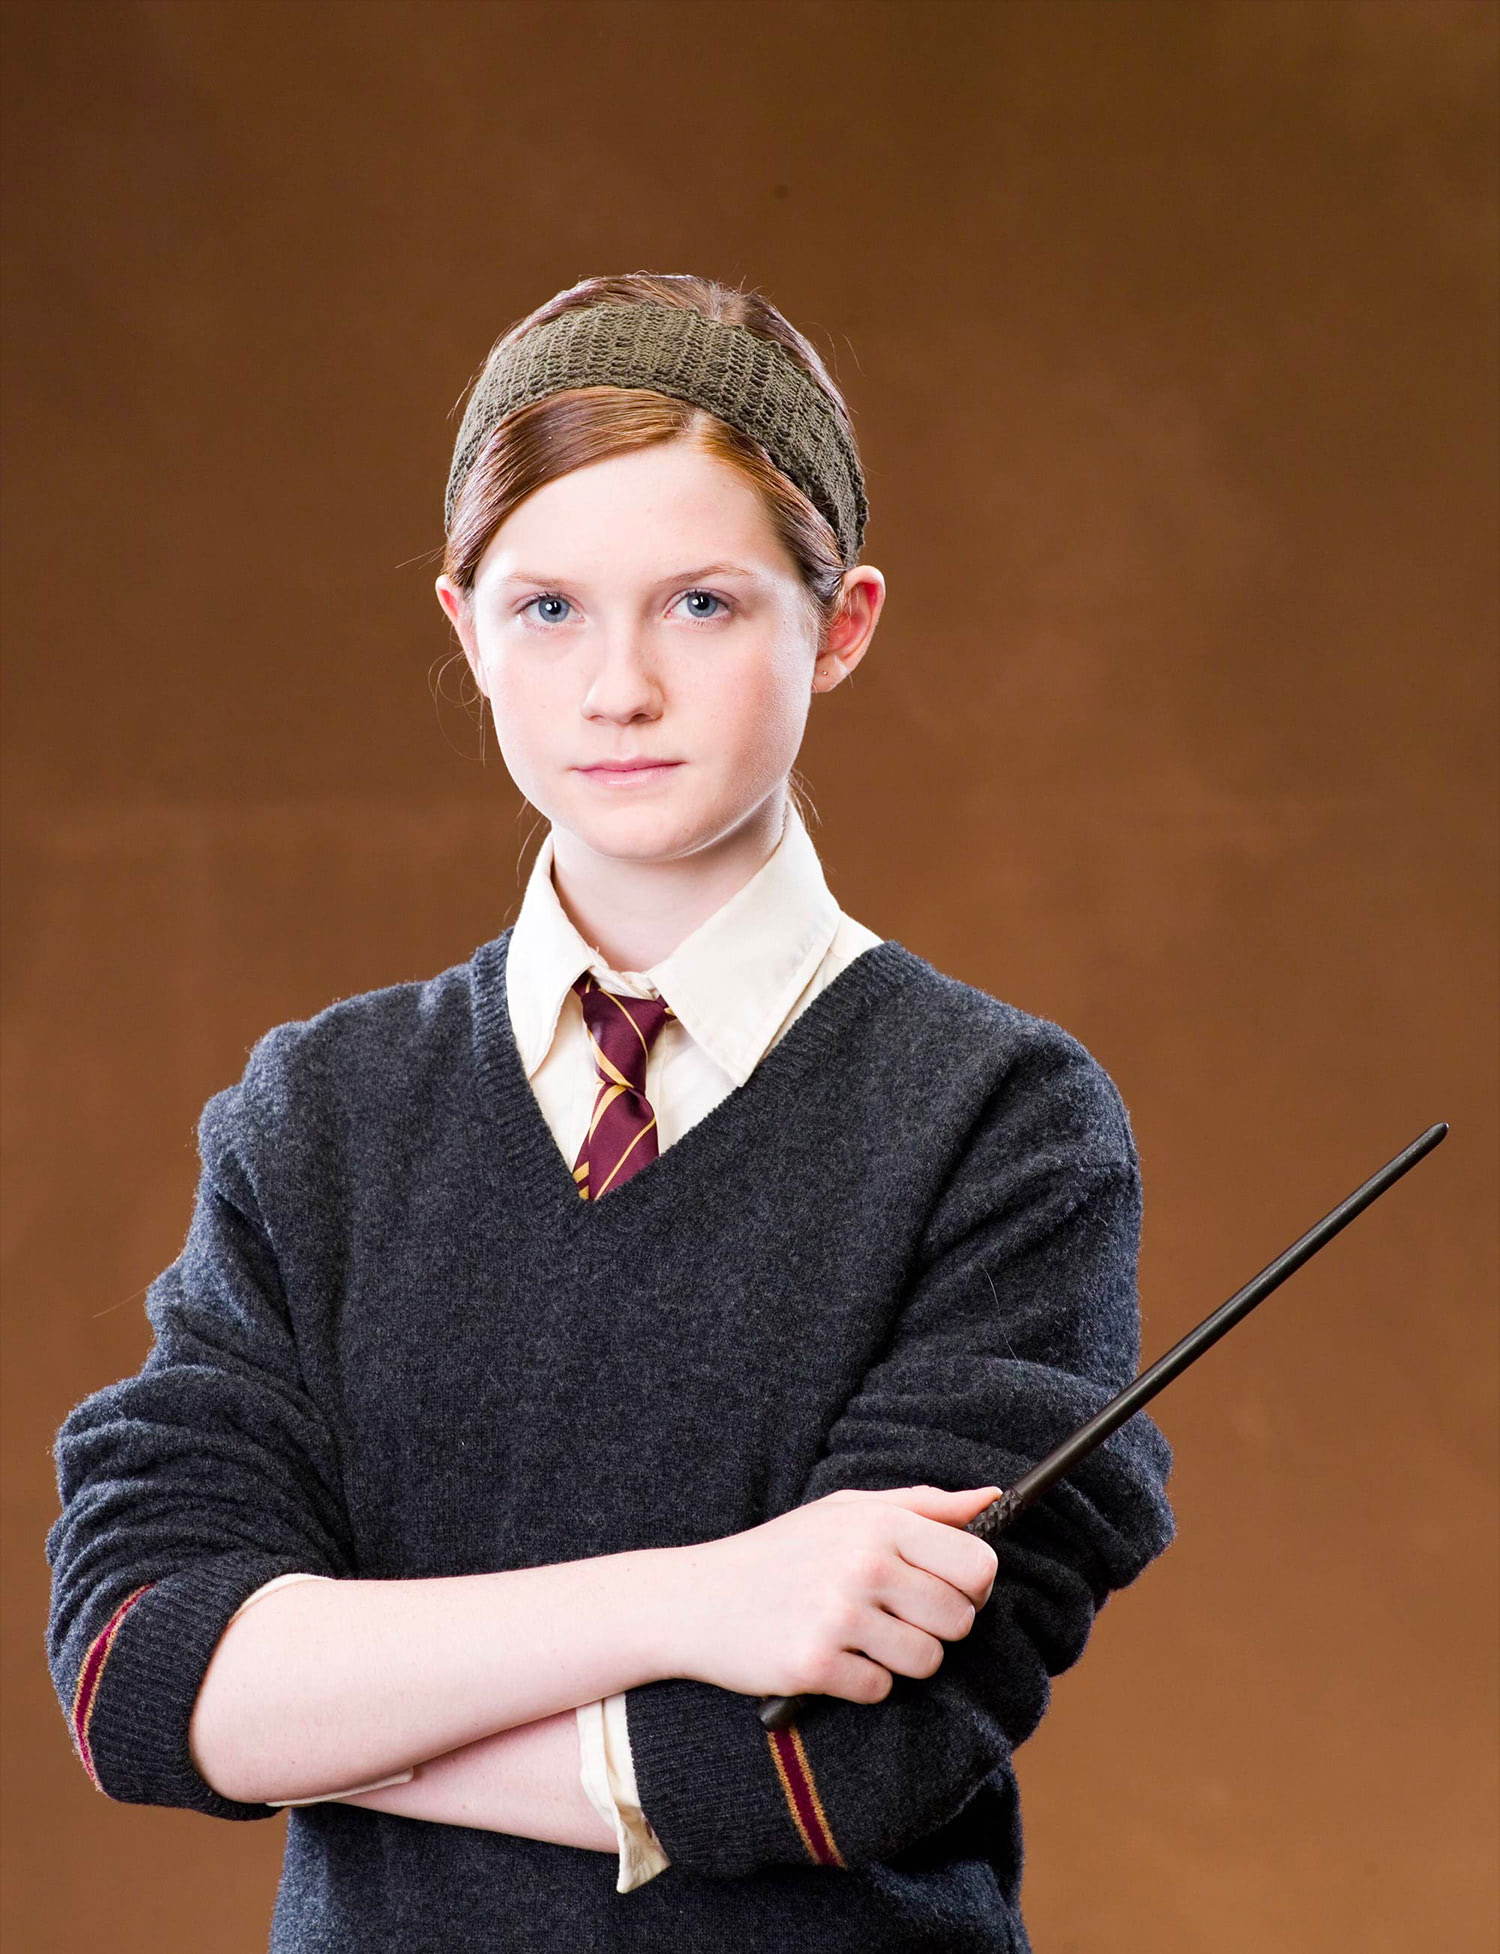 Portrait of Ginny Weasley